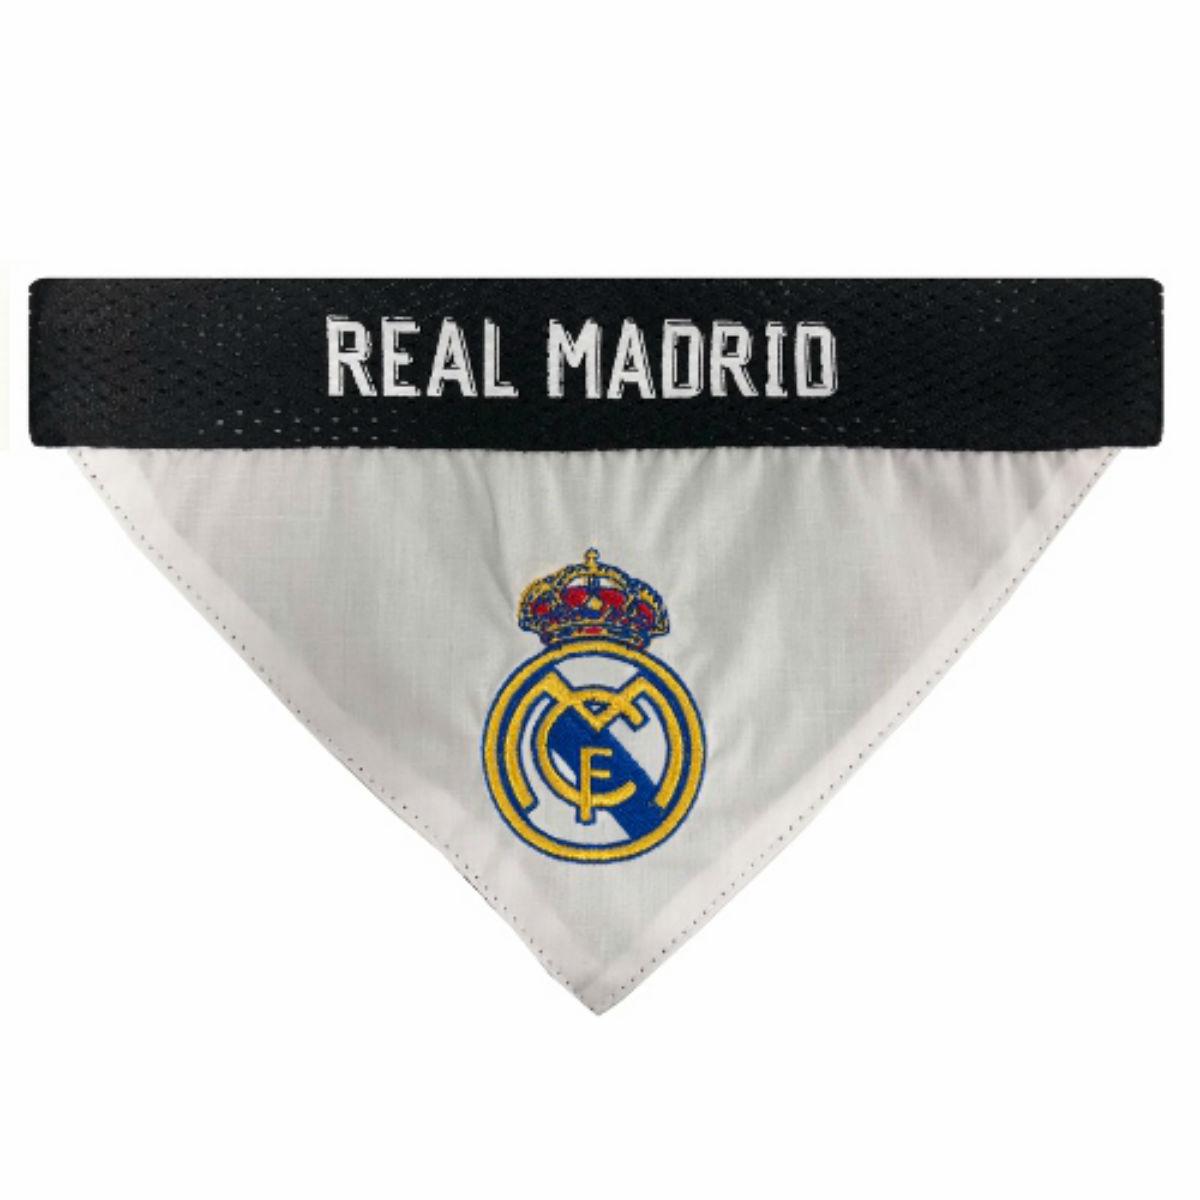 Real Madrid Real Madrid Bn-01-Rm Dog Bandana 1 Unit 21 g 